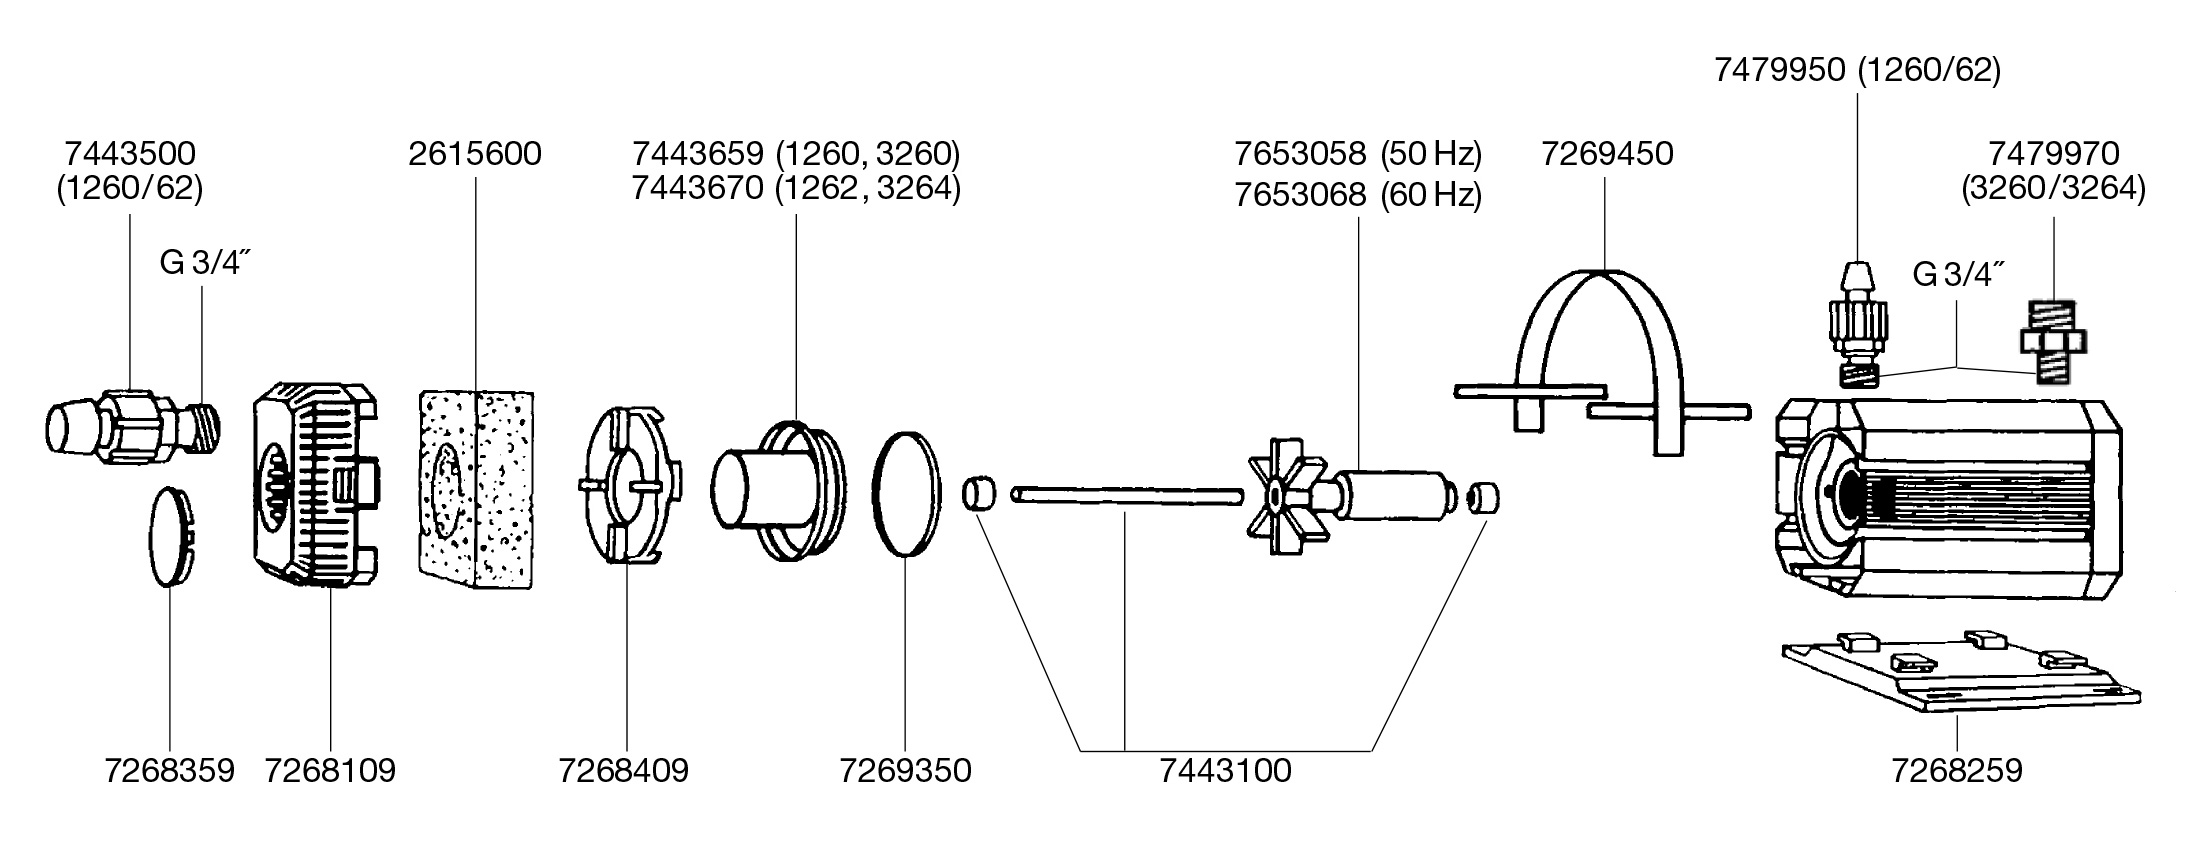 Universal Pump (1262 / 3400) - Eheim 